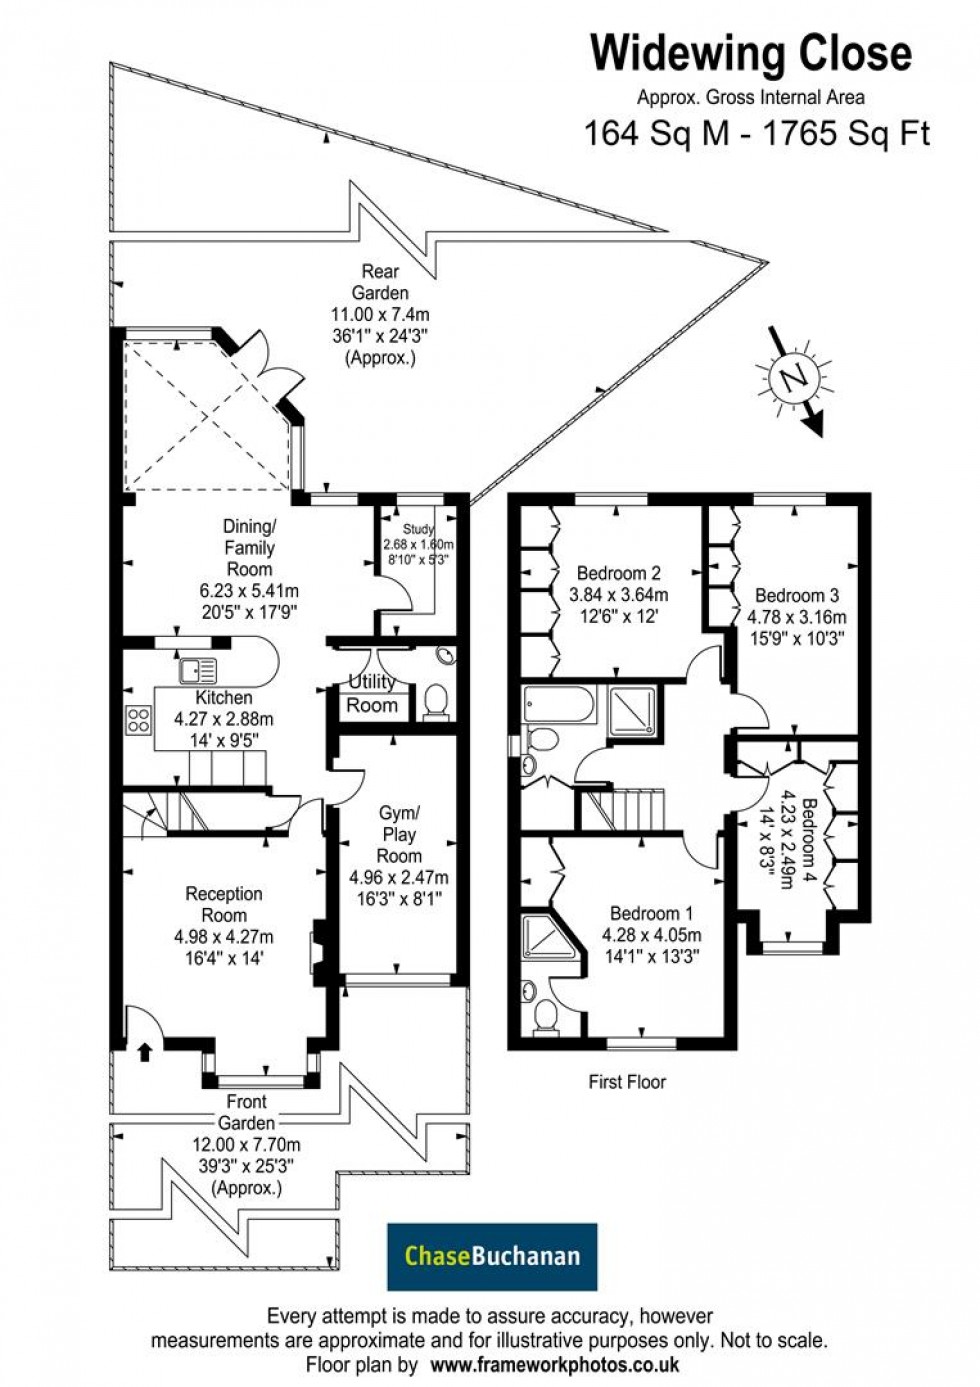 Floorplan for Widewing Close, Teddington